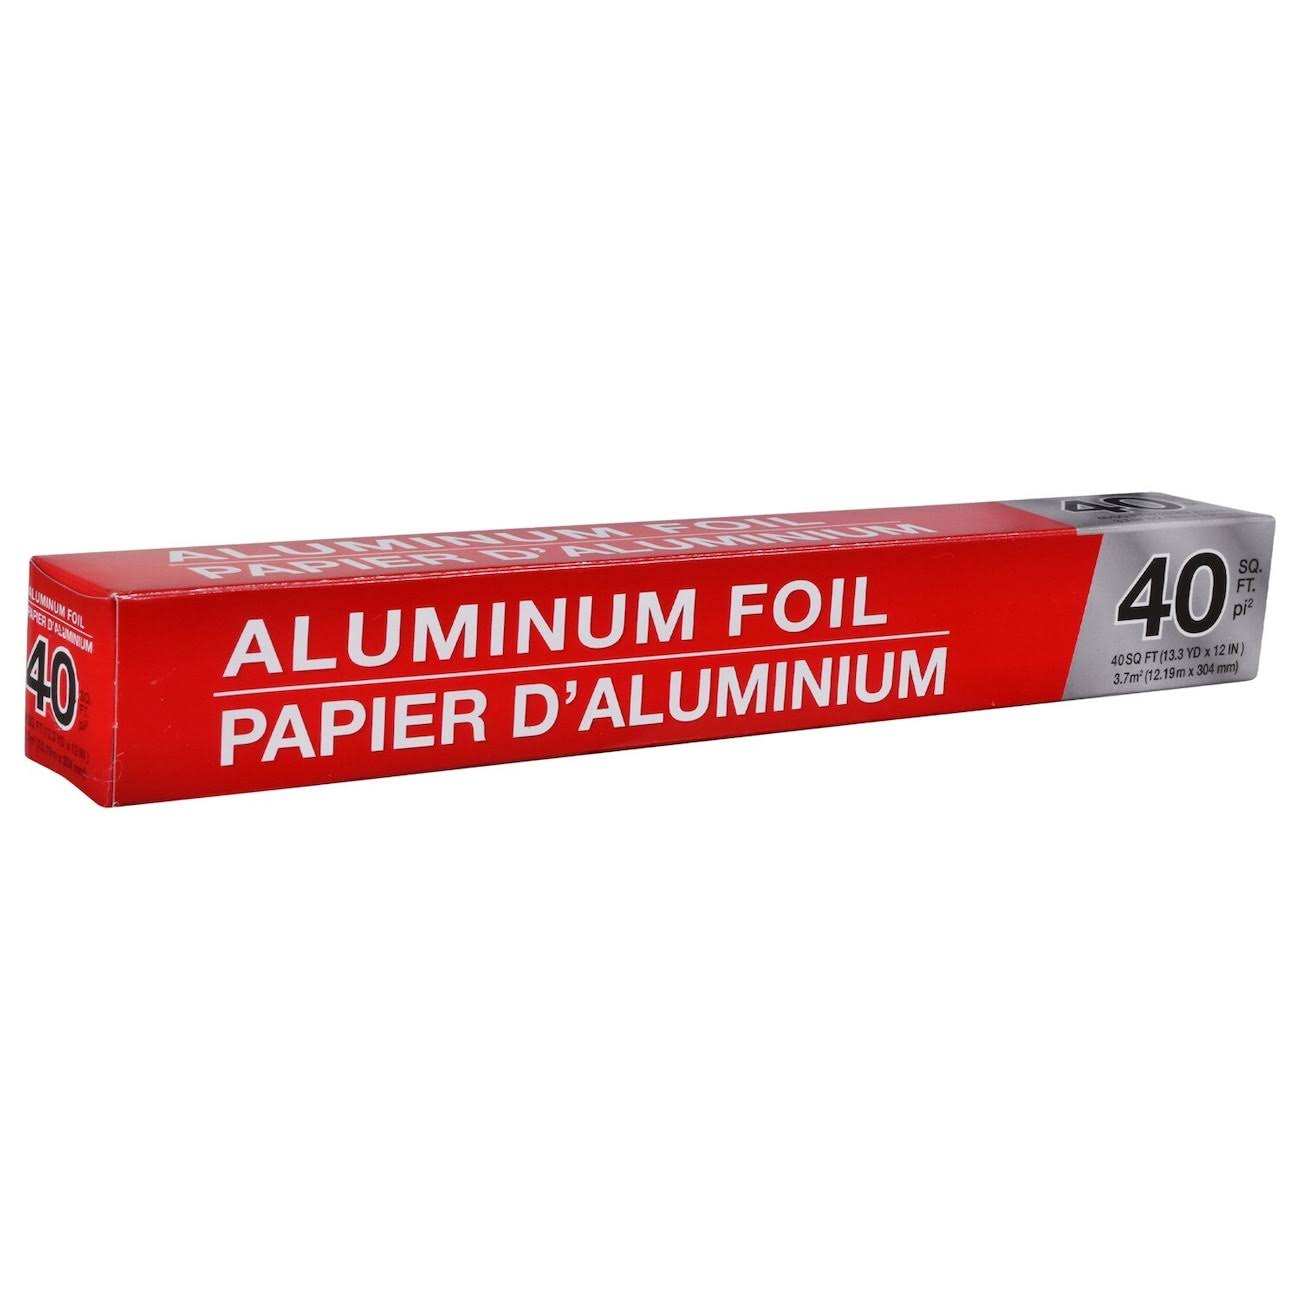 Dollar Tree Case of Aluminum Foil, 40-sq.ft. Rolls (35 Units)